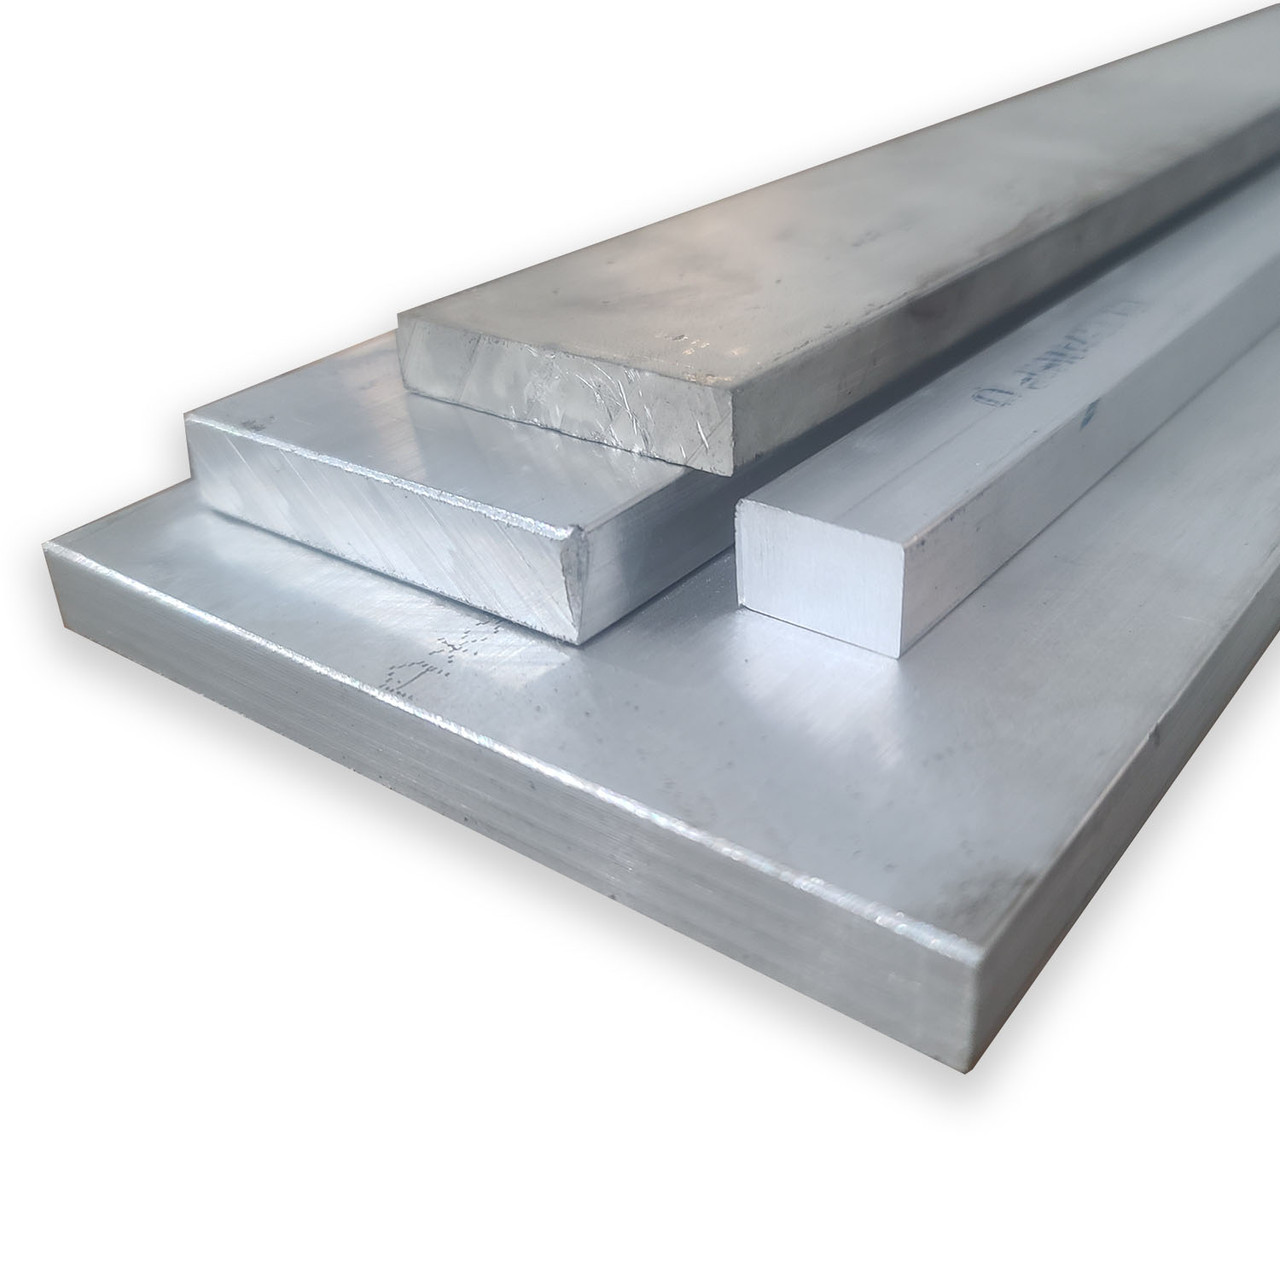 0.500" x 4" x 24", 6061-T6511 Aluminum Flat Bar